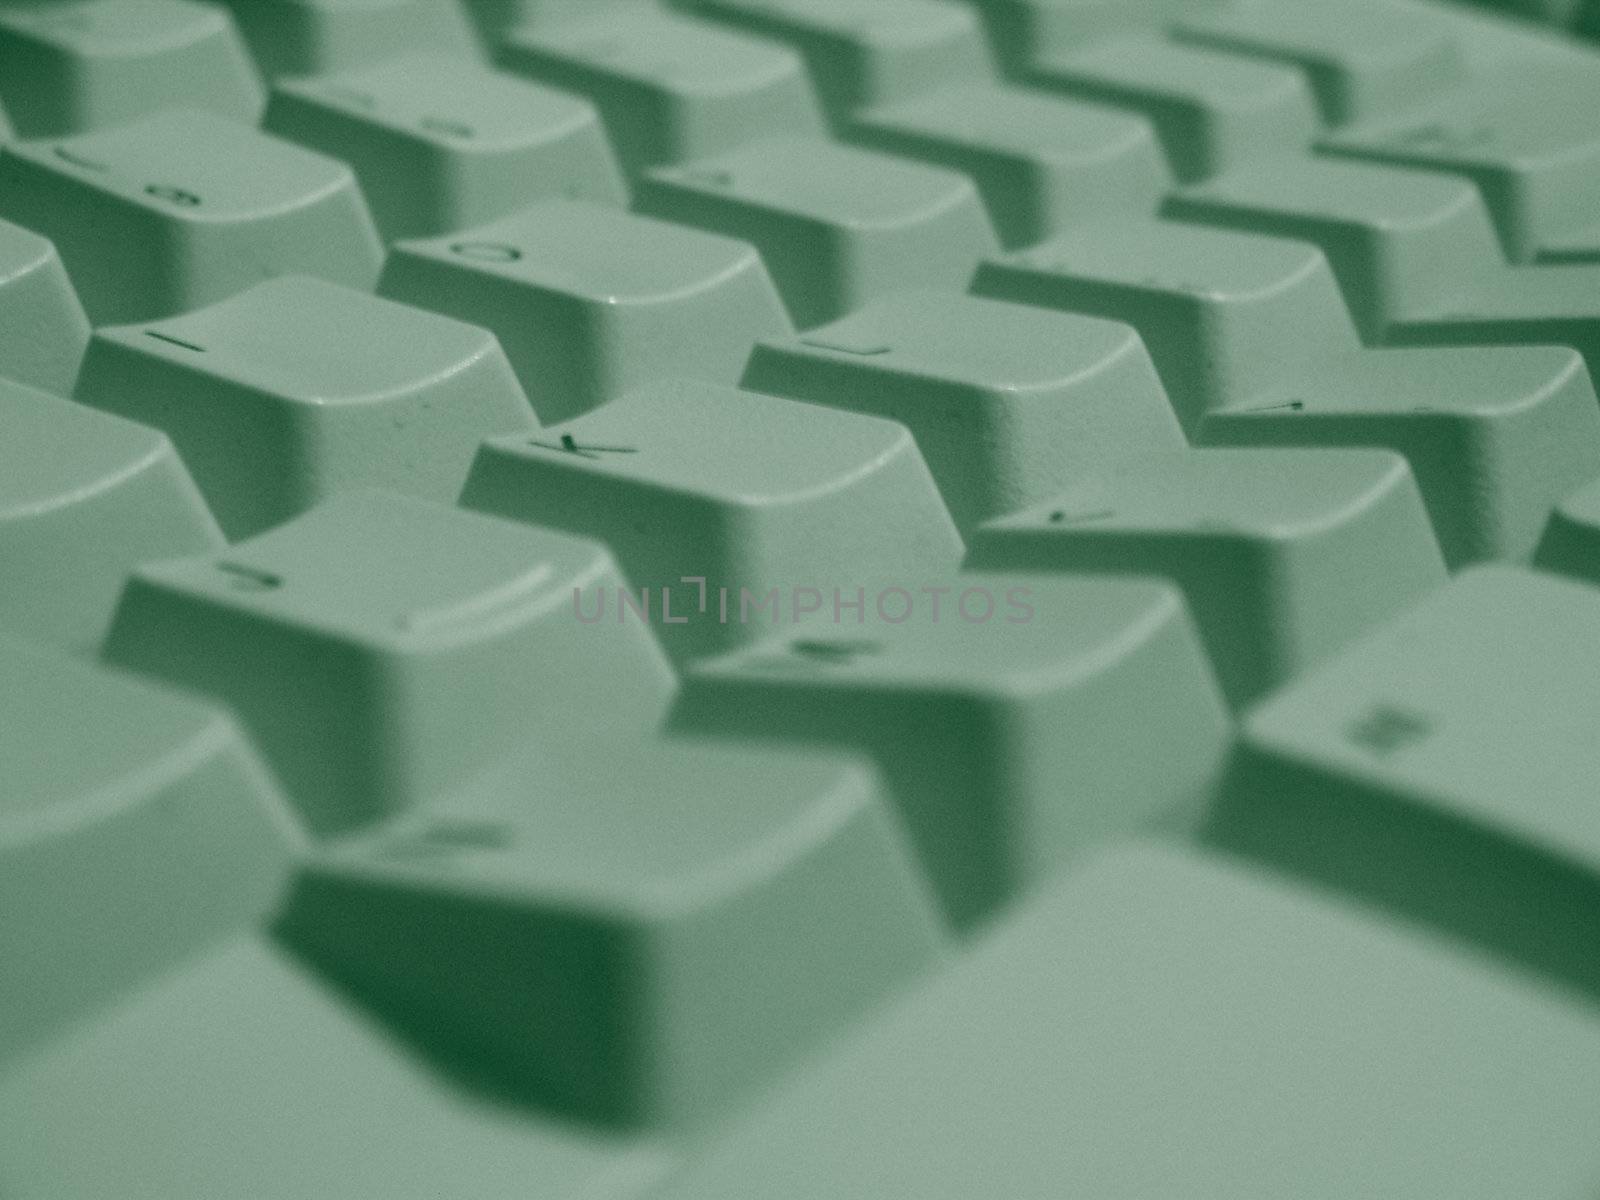 A close up shot of some keys on a desktop keyboard.